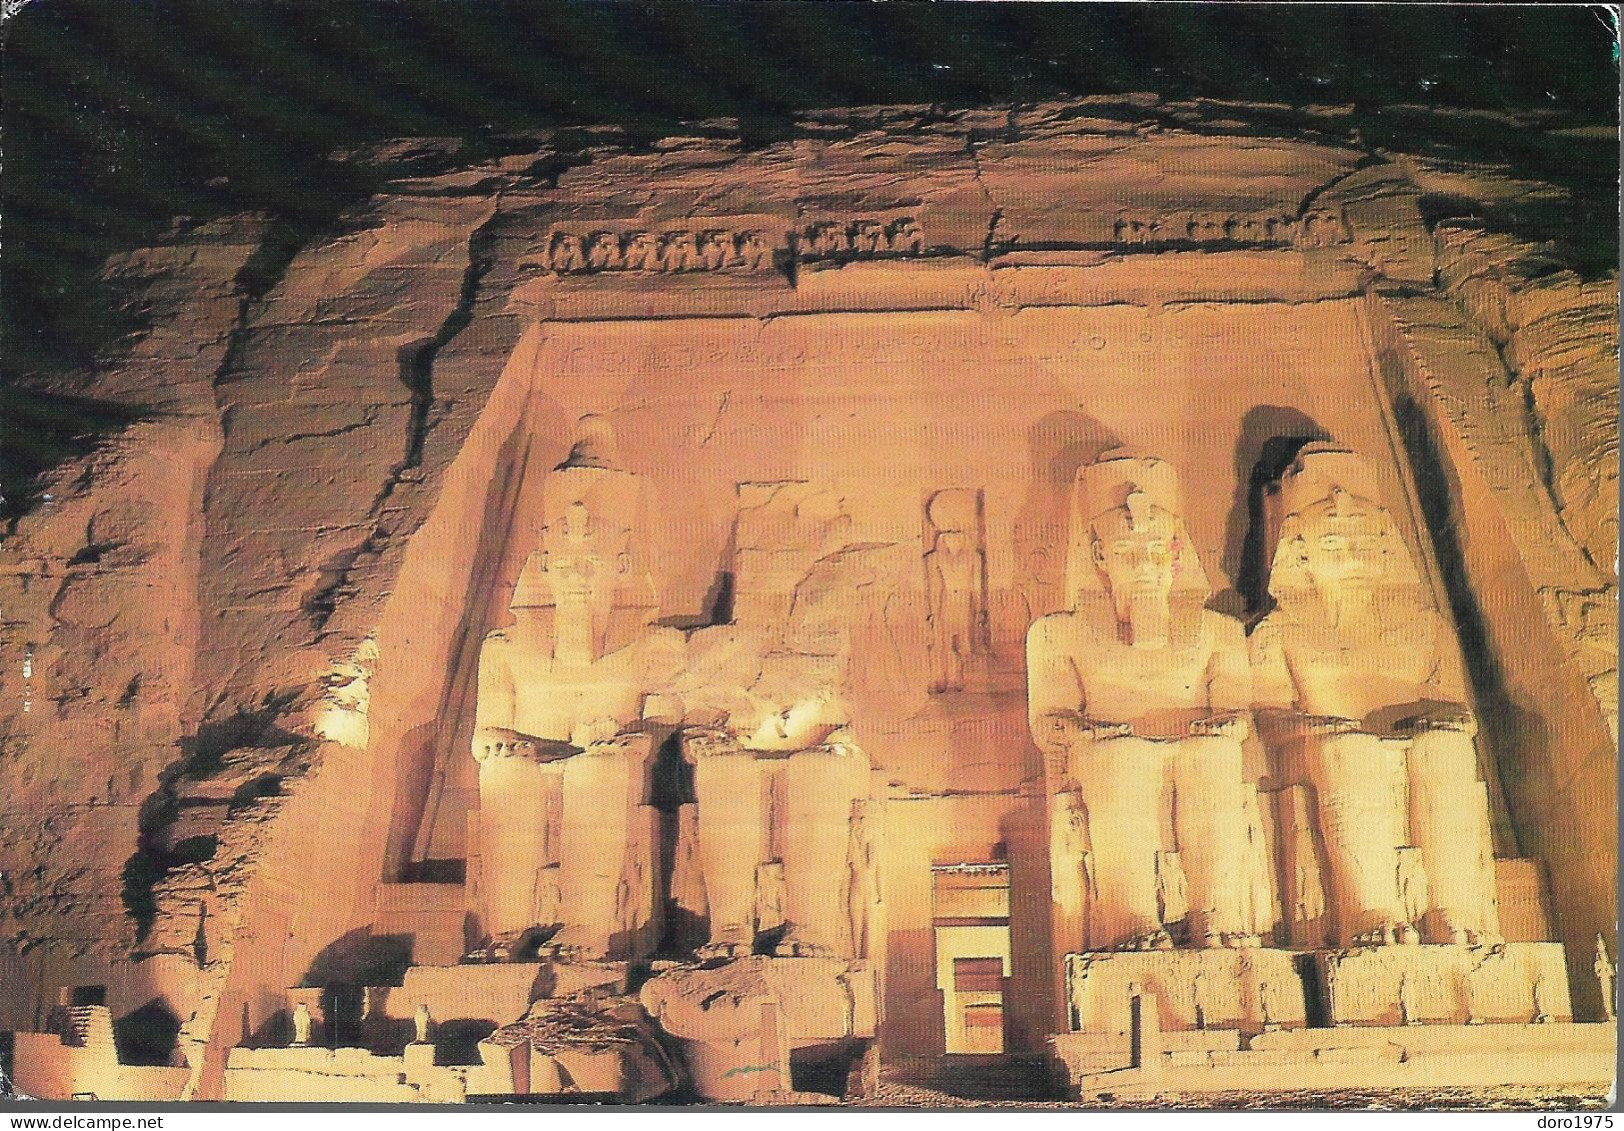 EGYPT - Abu Simbel Temple By Night - Used Postcard - Abu Simbel Temples